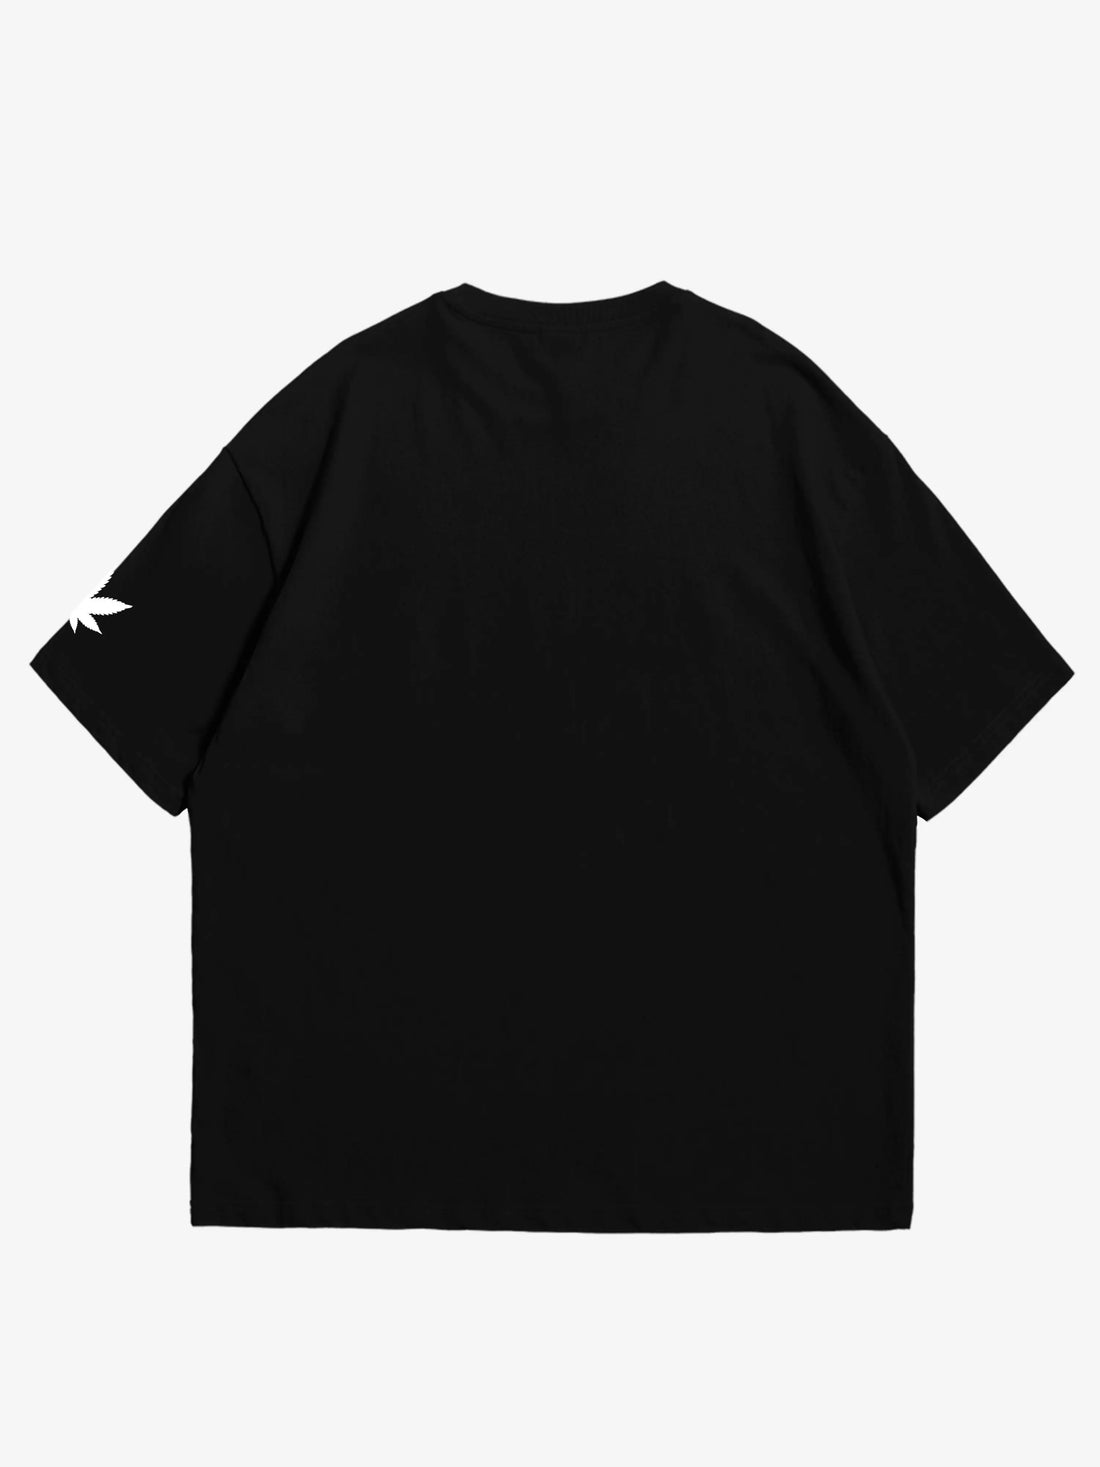 black oversized T-shirt, skream sports 420 y2k print, skream streetwear t-shirt 